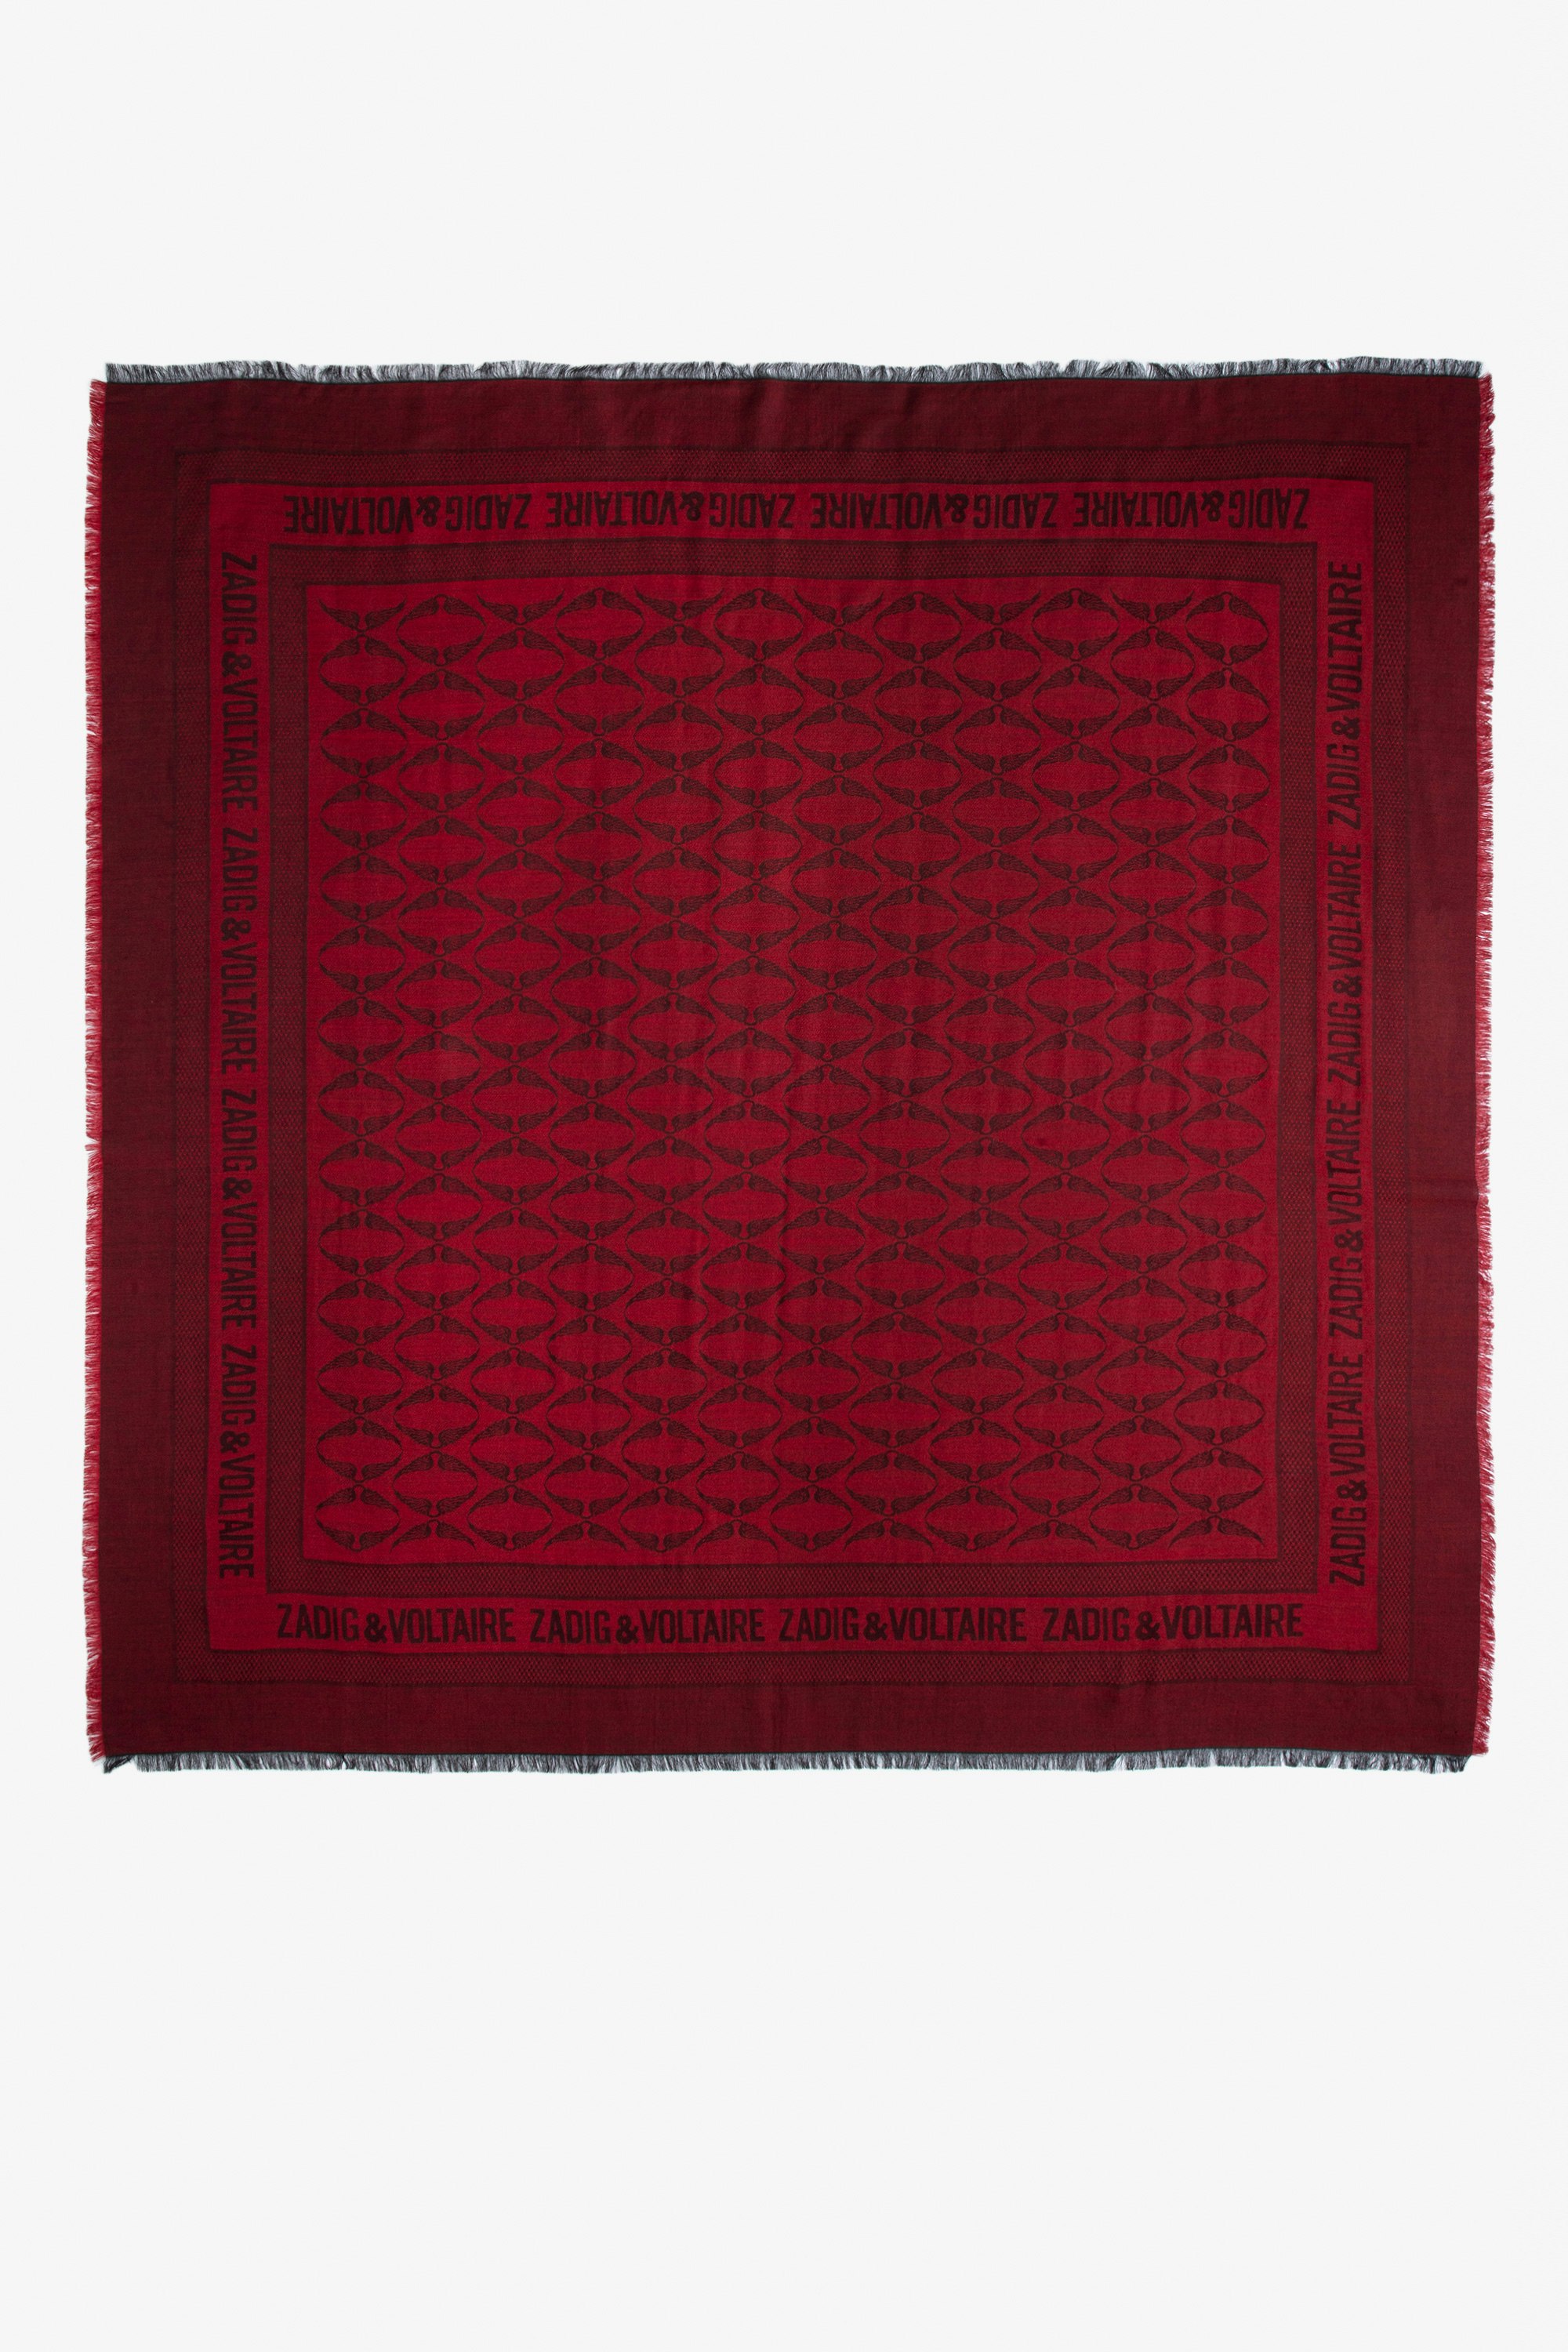 Glenn Scarf - Women’s red rectangular jacquard scarf.